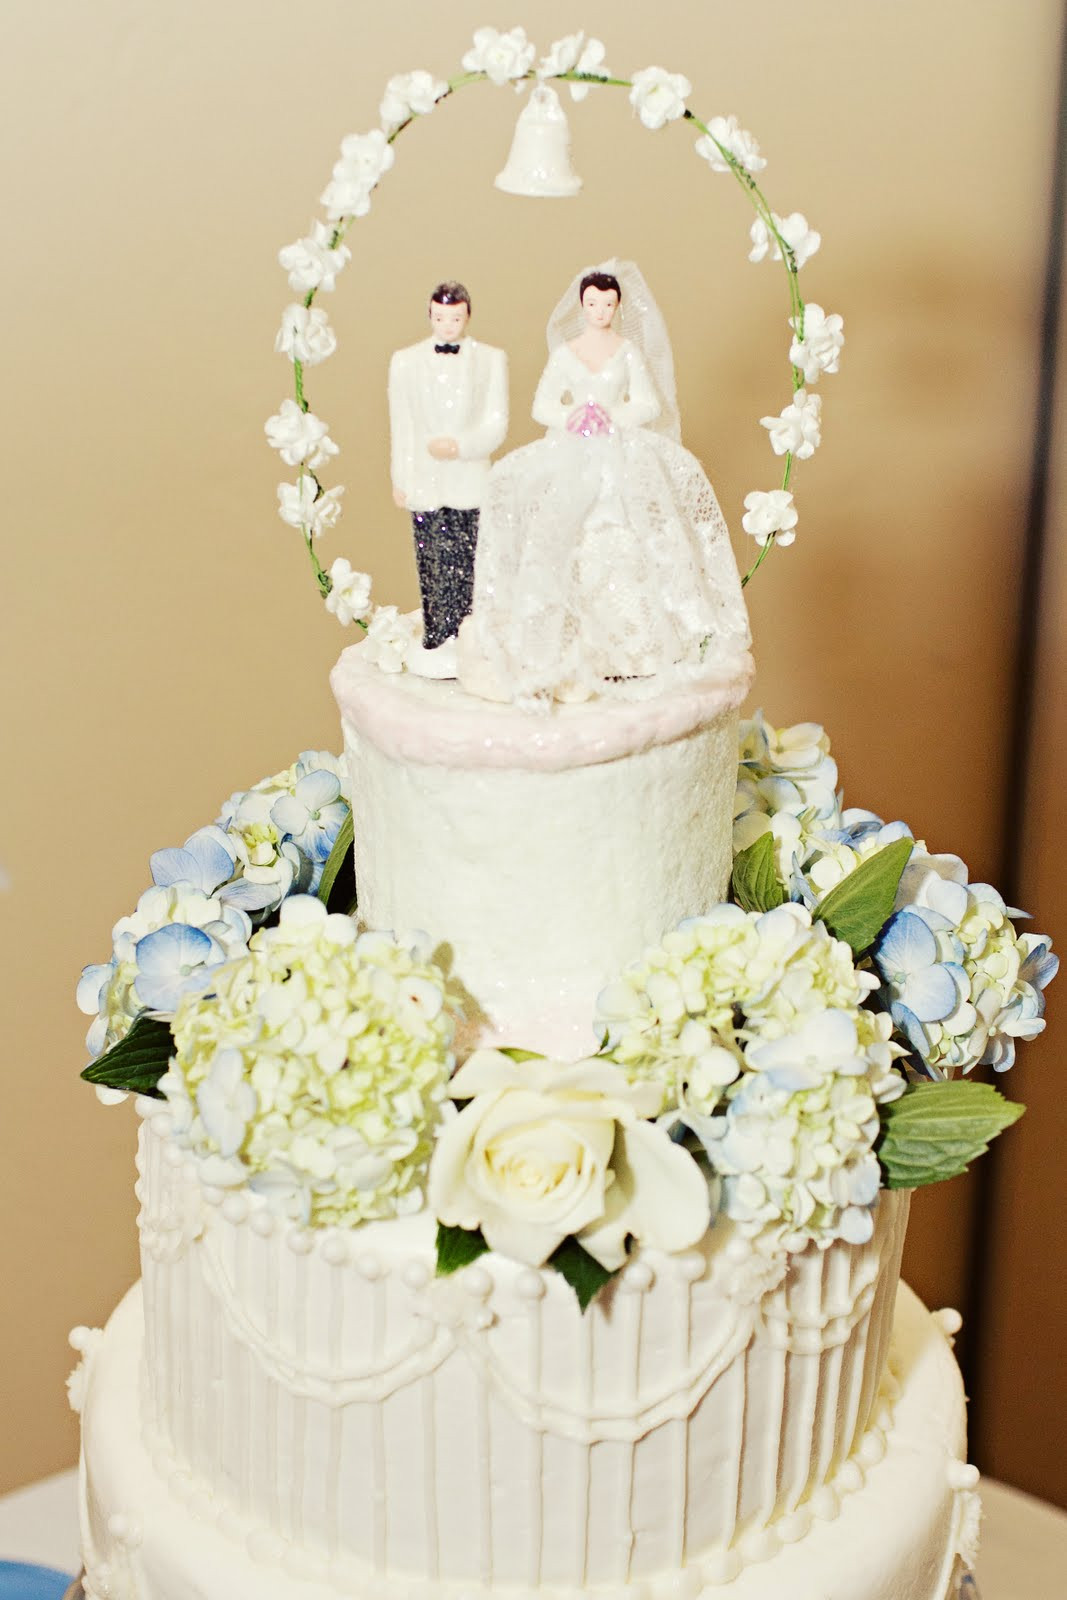 Shabby Chic Wedding Cakes
 The Marrying Cake Shabby Chic Wedding Cake